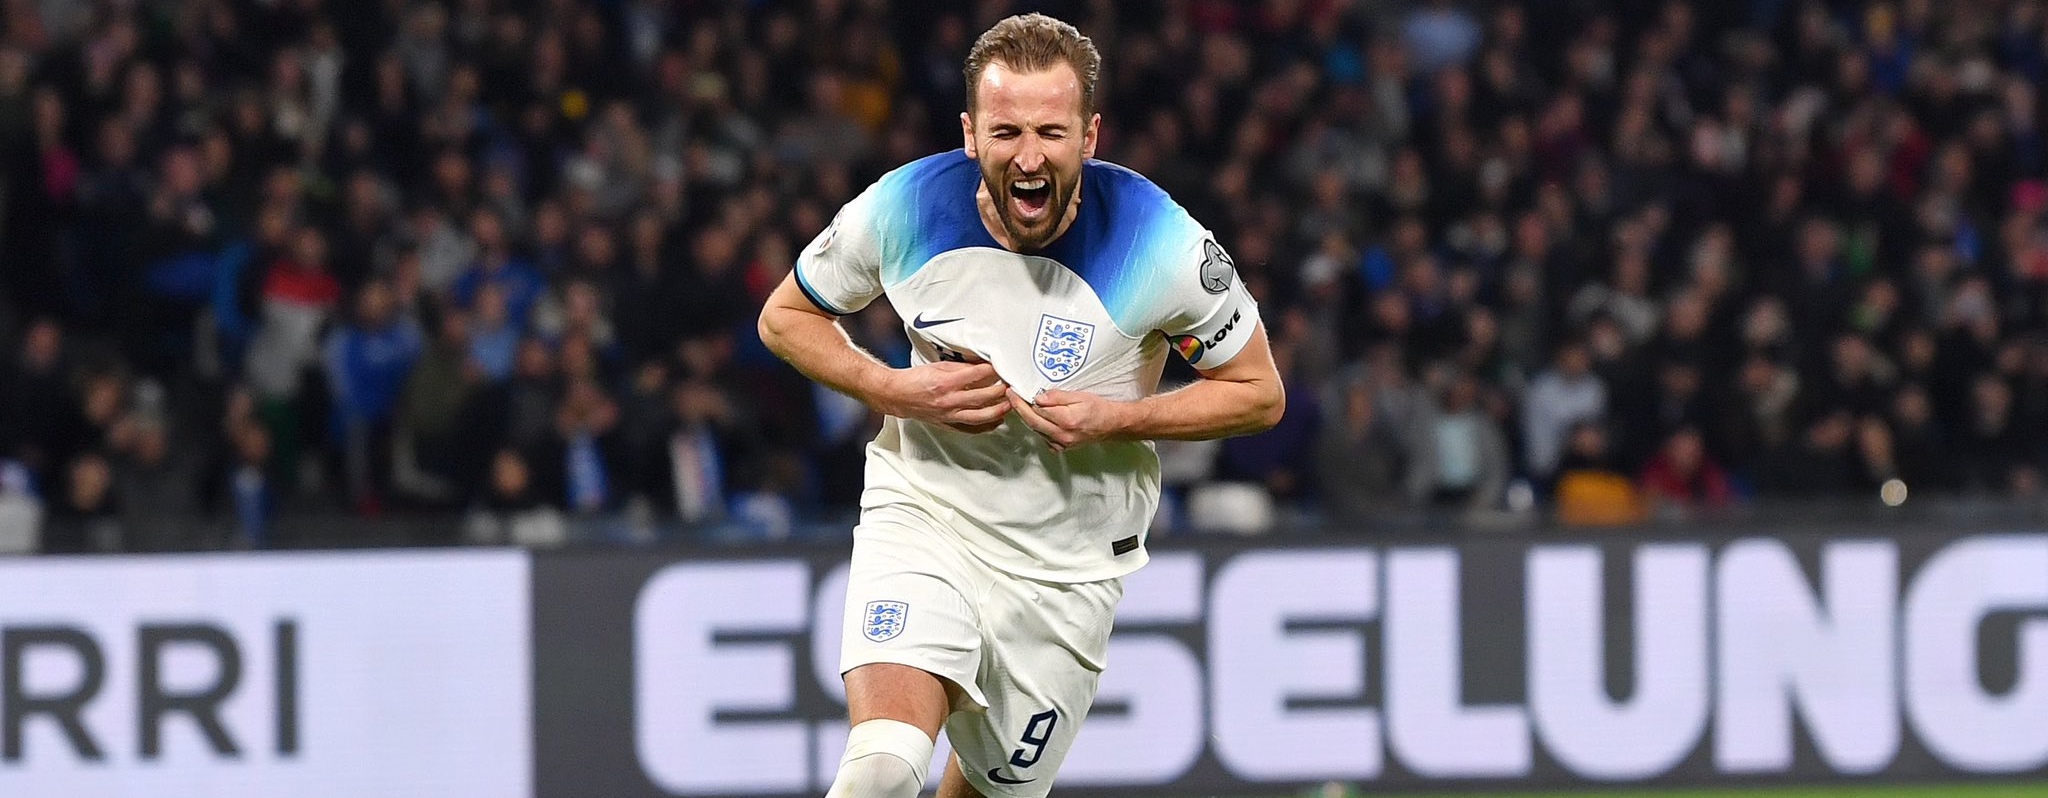 Cetak Rekor Gol Terbanyak Inggris, Harry Kane: Saya Merasa Sangat Emosional